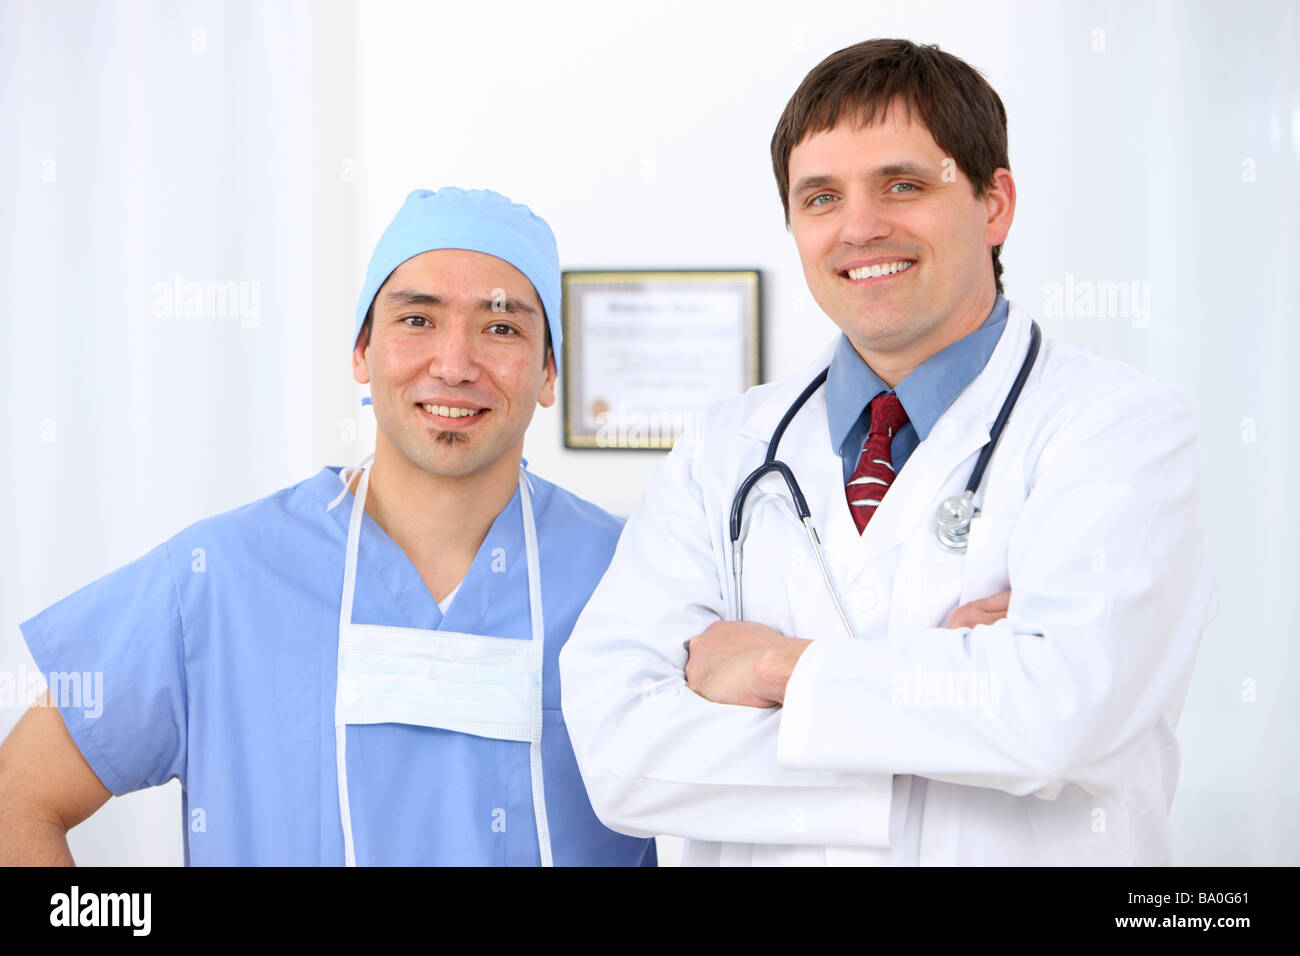 Doctor and Surgeon portrait Stock Photo